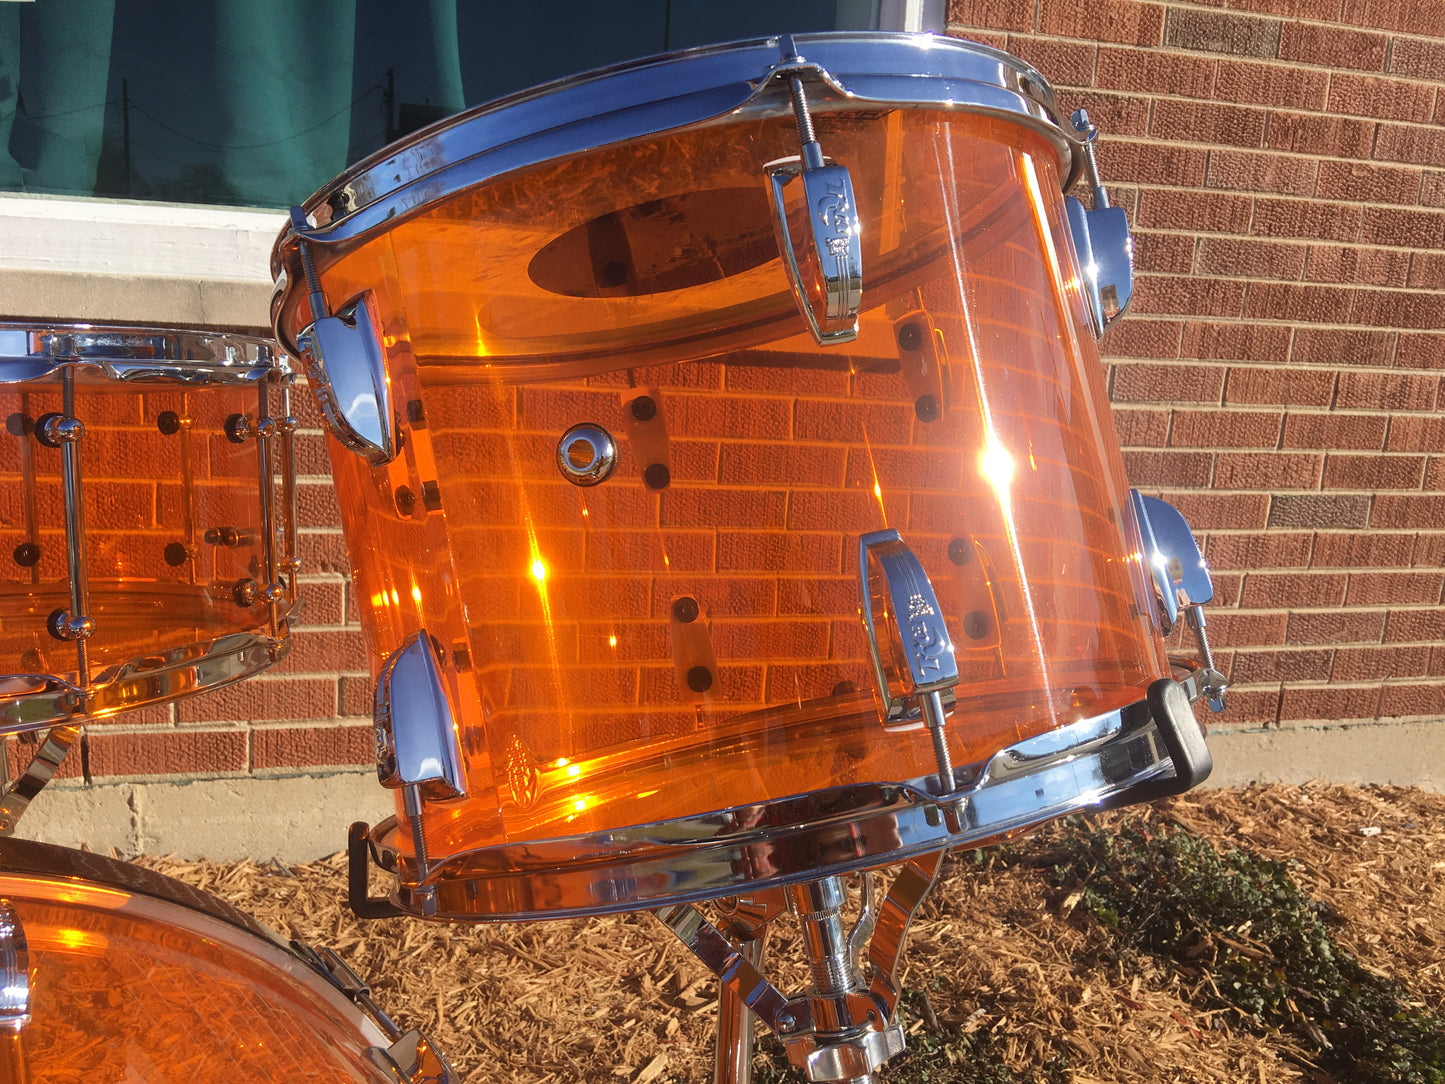 RCI / Ludwig Amber Vistalite Bonham Drum Set 26/14/16/18/ w/ 6.5x14 Snare